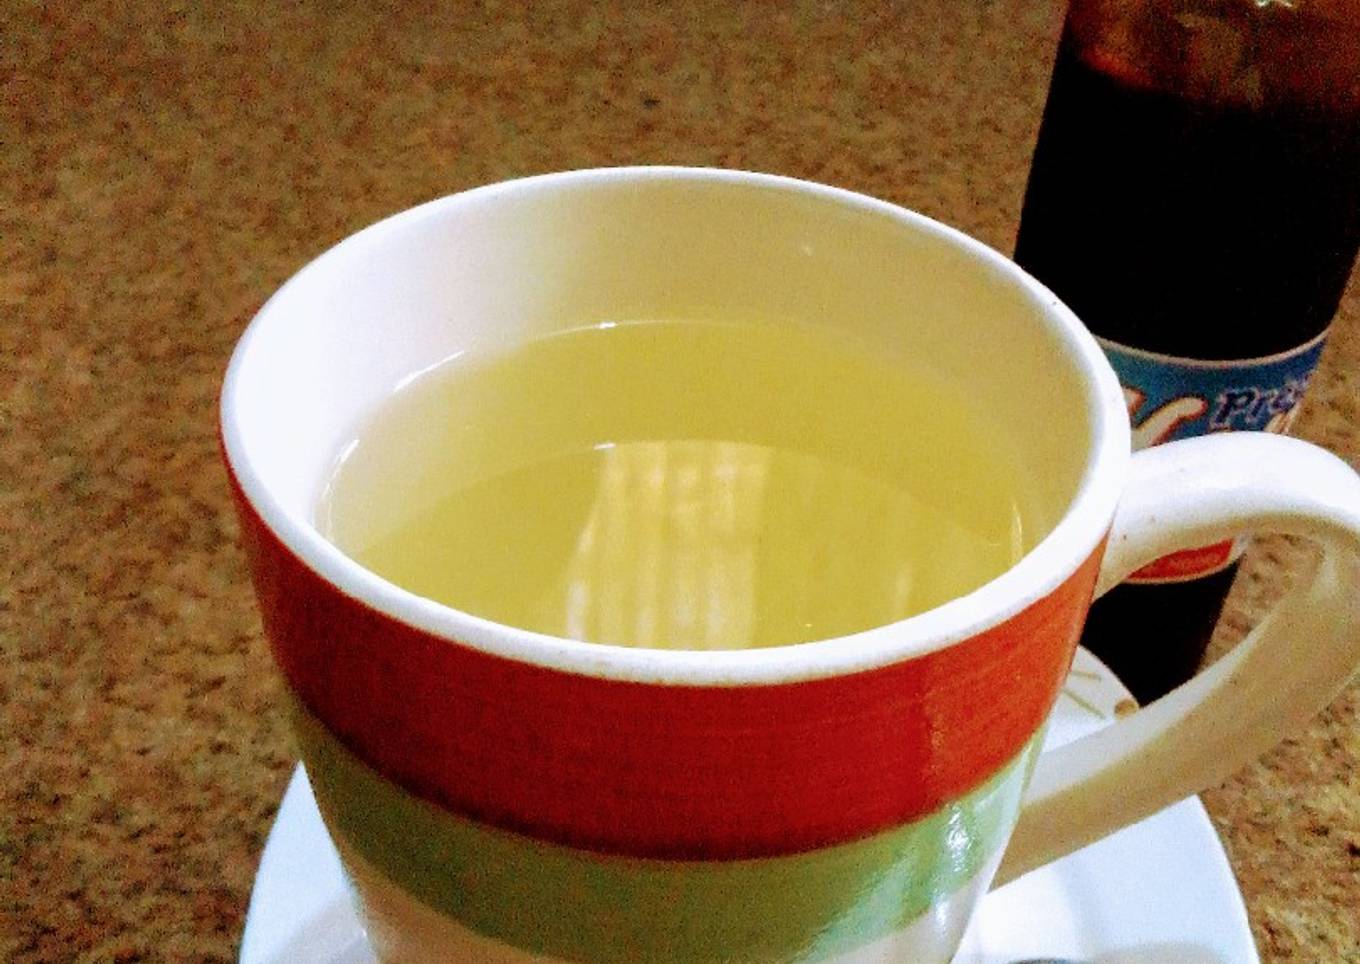 Special Lemon Tea